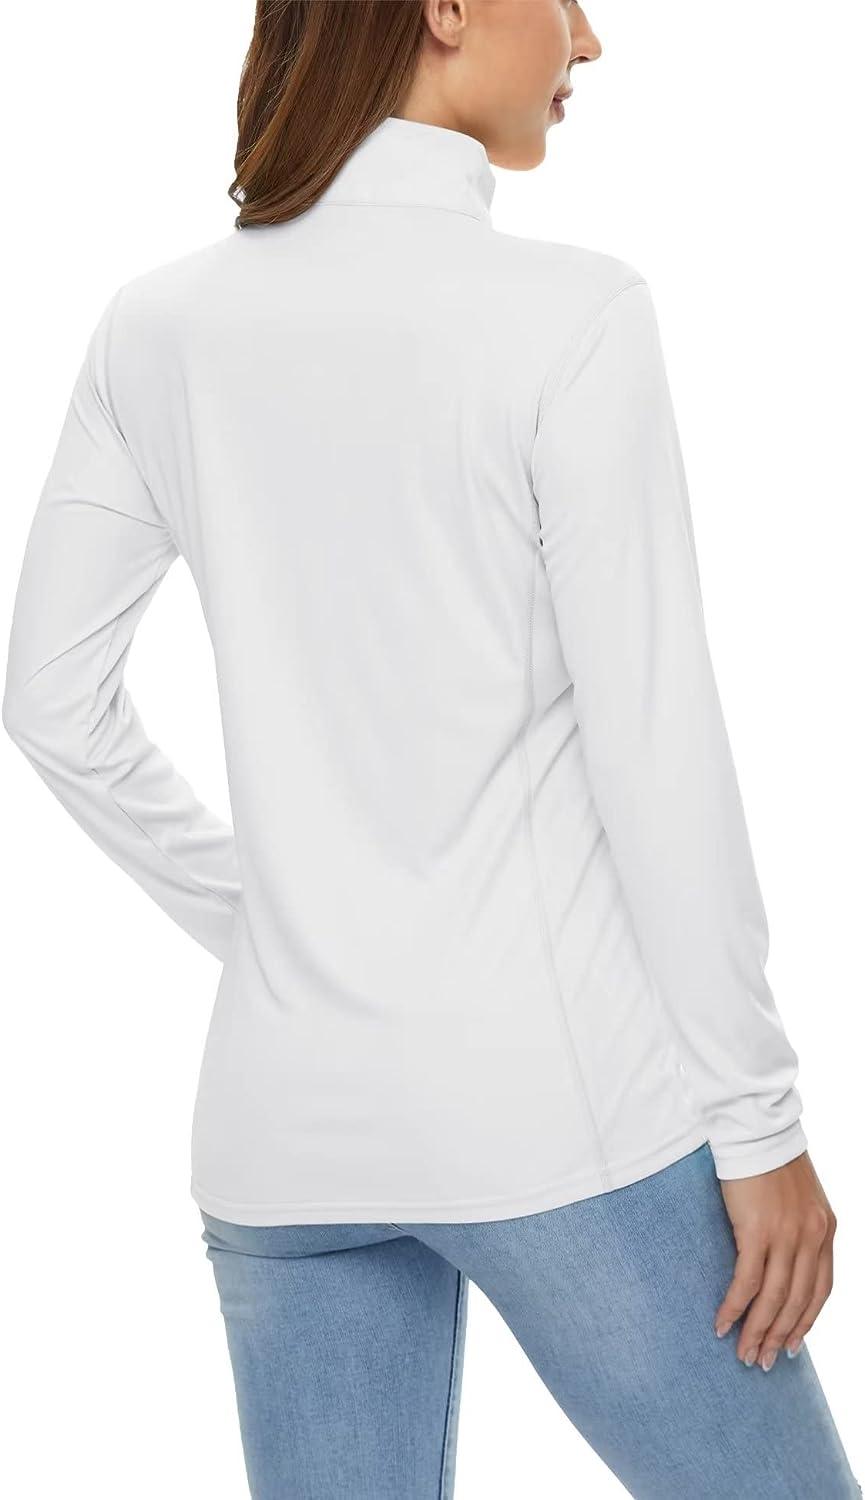 MAGCOMSEN Women's Shirts Long Sleeve 1/4 Zip UPF50+ UV Sun Protection Quick  Dry Workout Hiking Athletic Shirts Rash Guard White Large